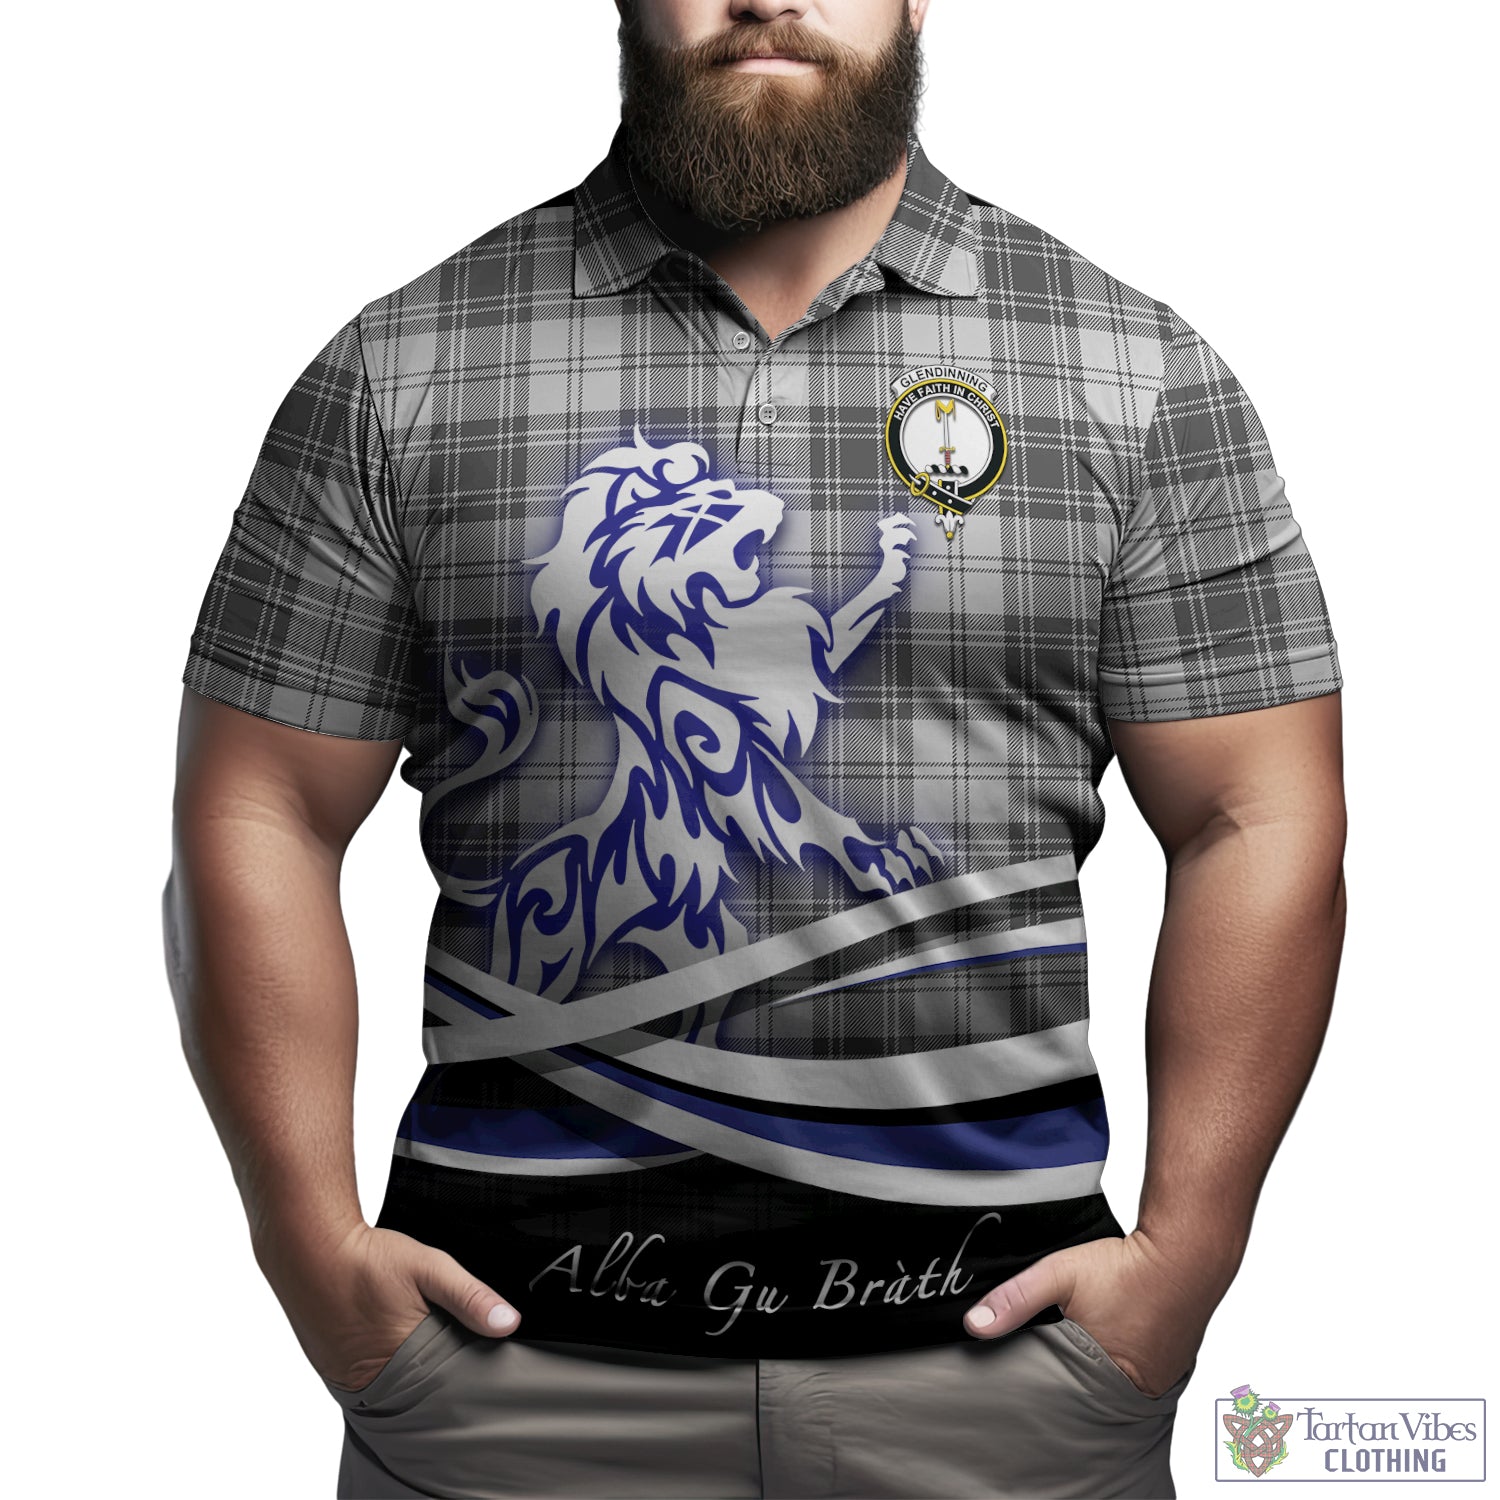 glendinning-tartan-polo-shirt-with-alba-gu-brath-regal-lion-emblem